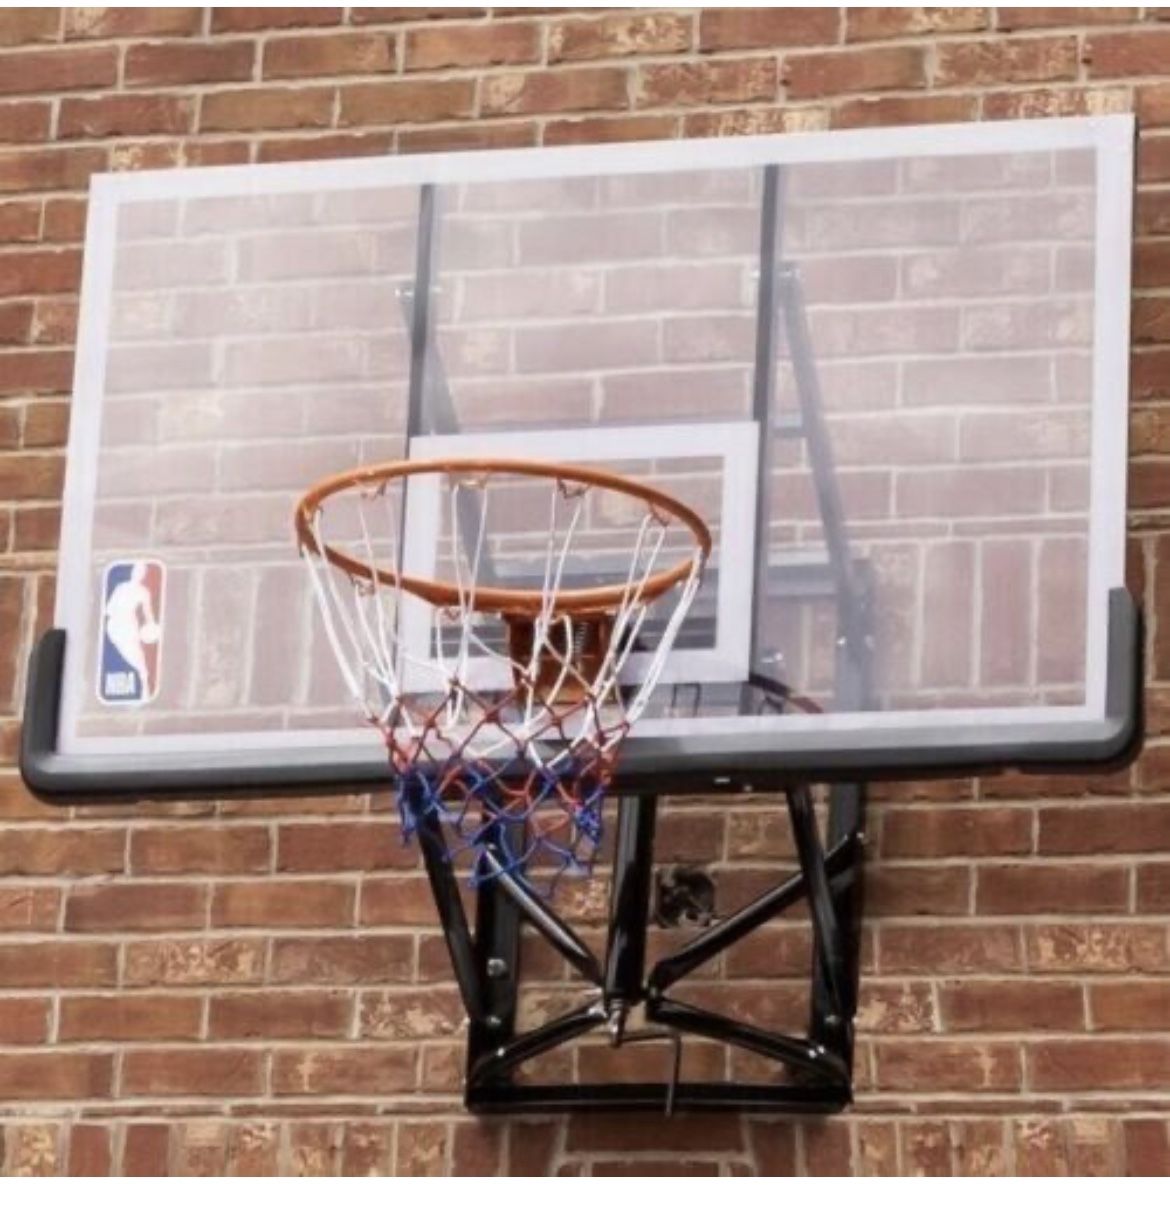 NBA Official 54” Wall-Mounted Basketball Hoop Polycarbonate Backboard